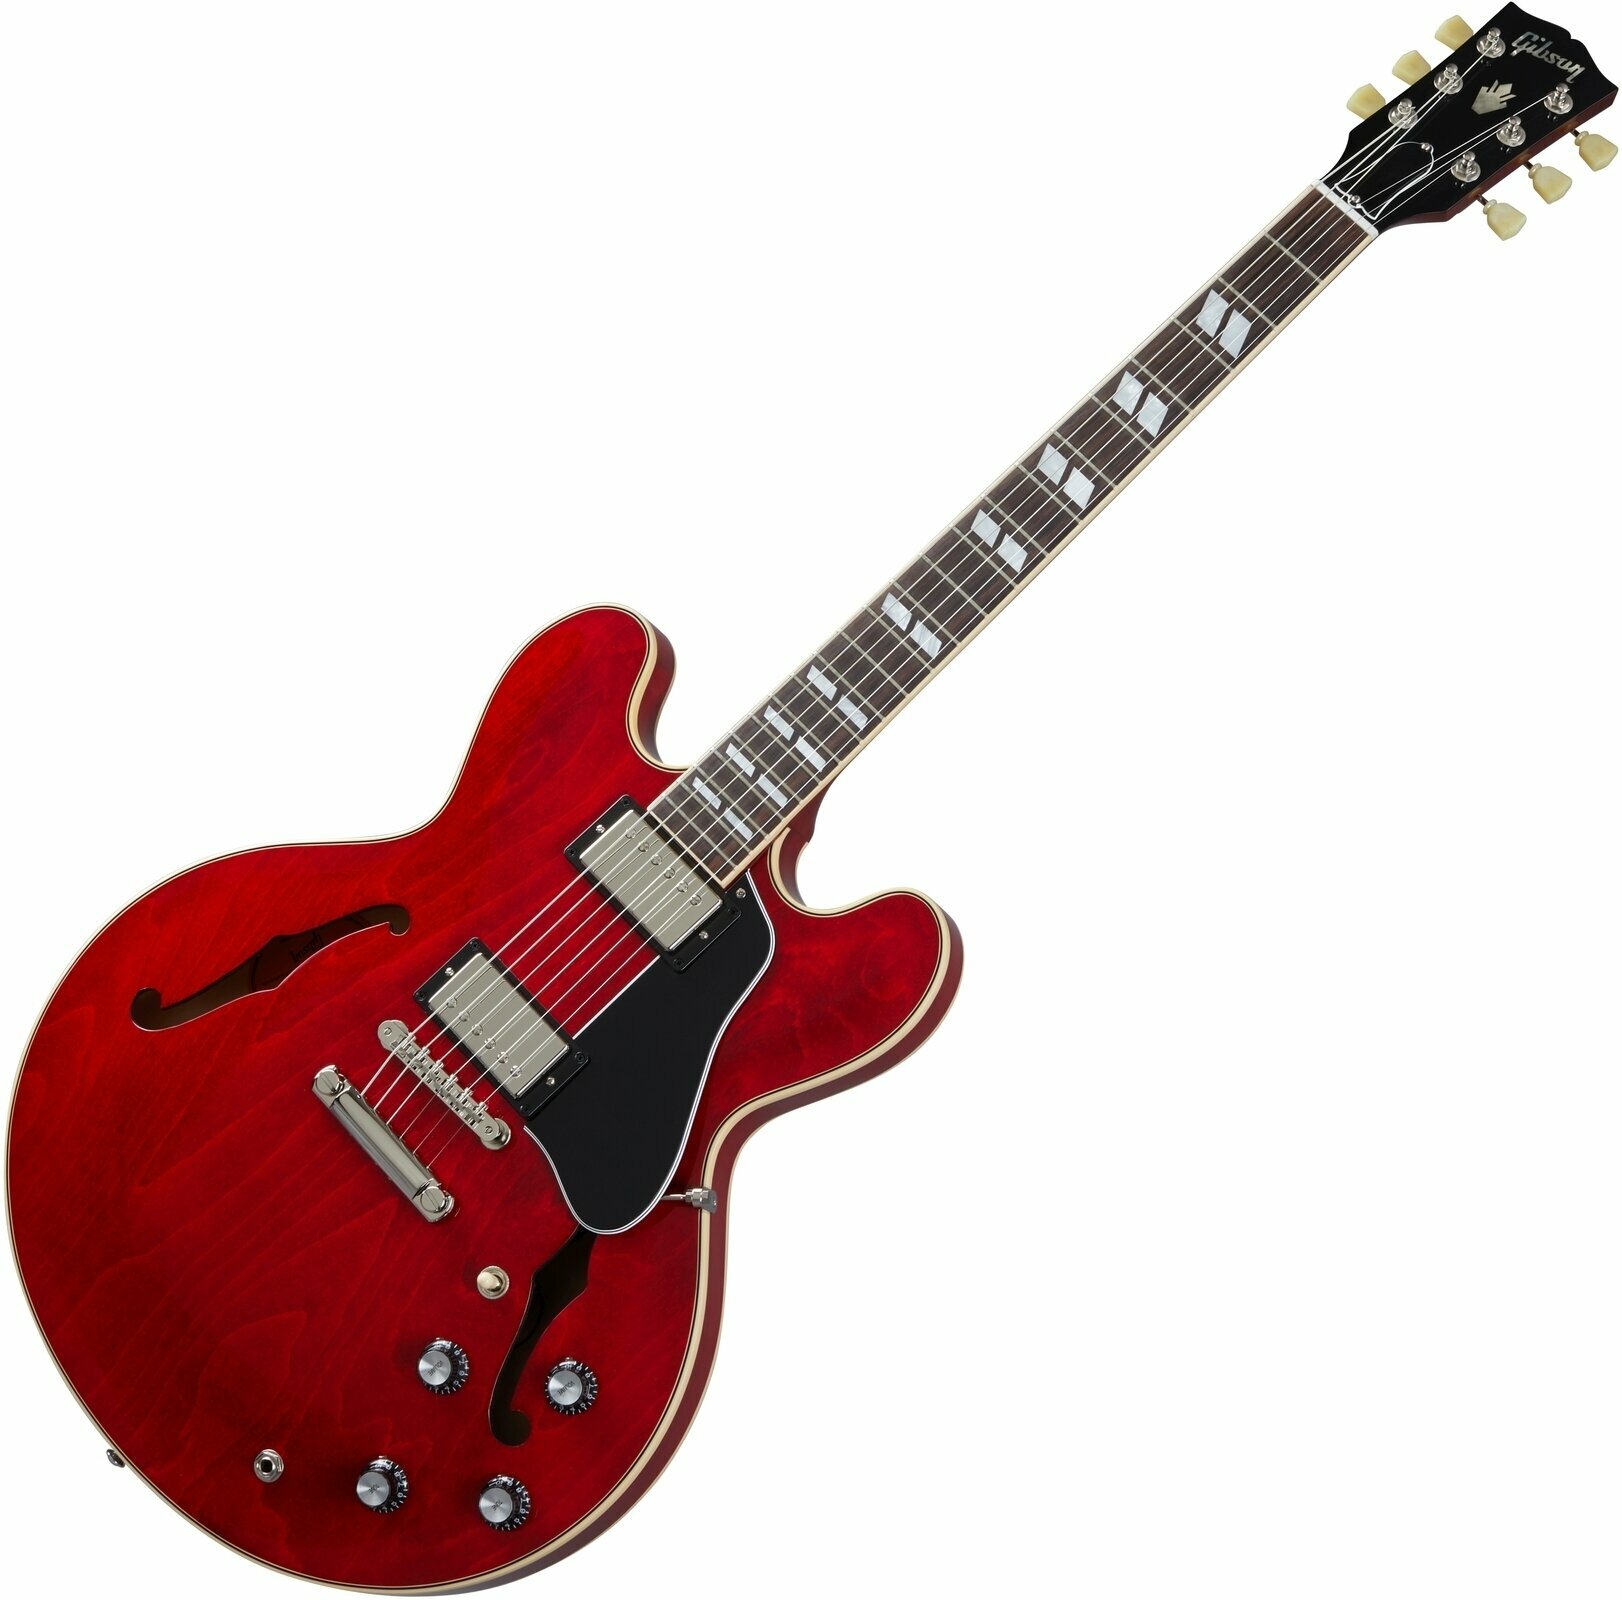 Semiakustická kytara Gibson ES-345 Sixties Cherry